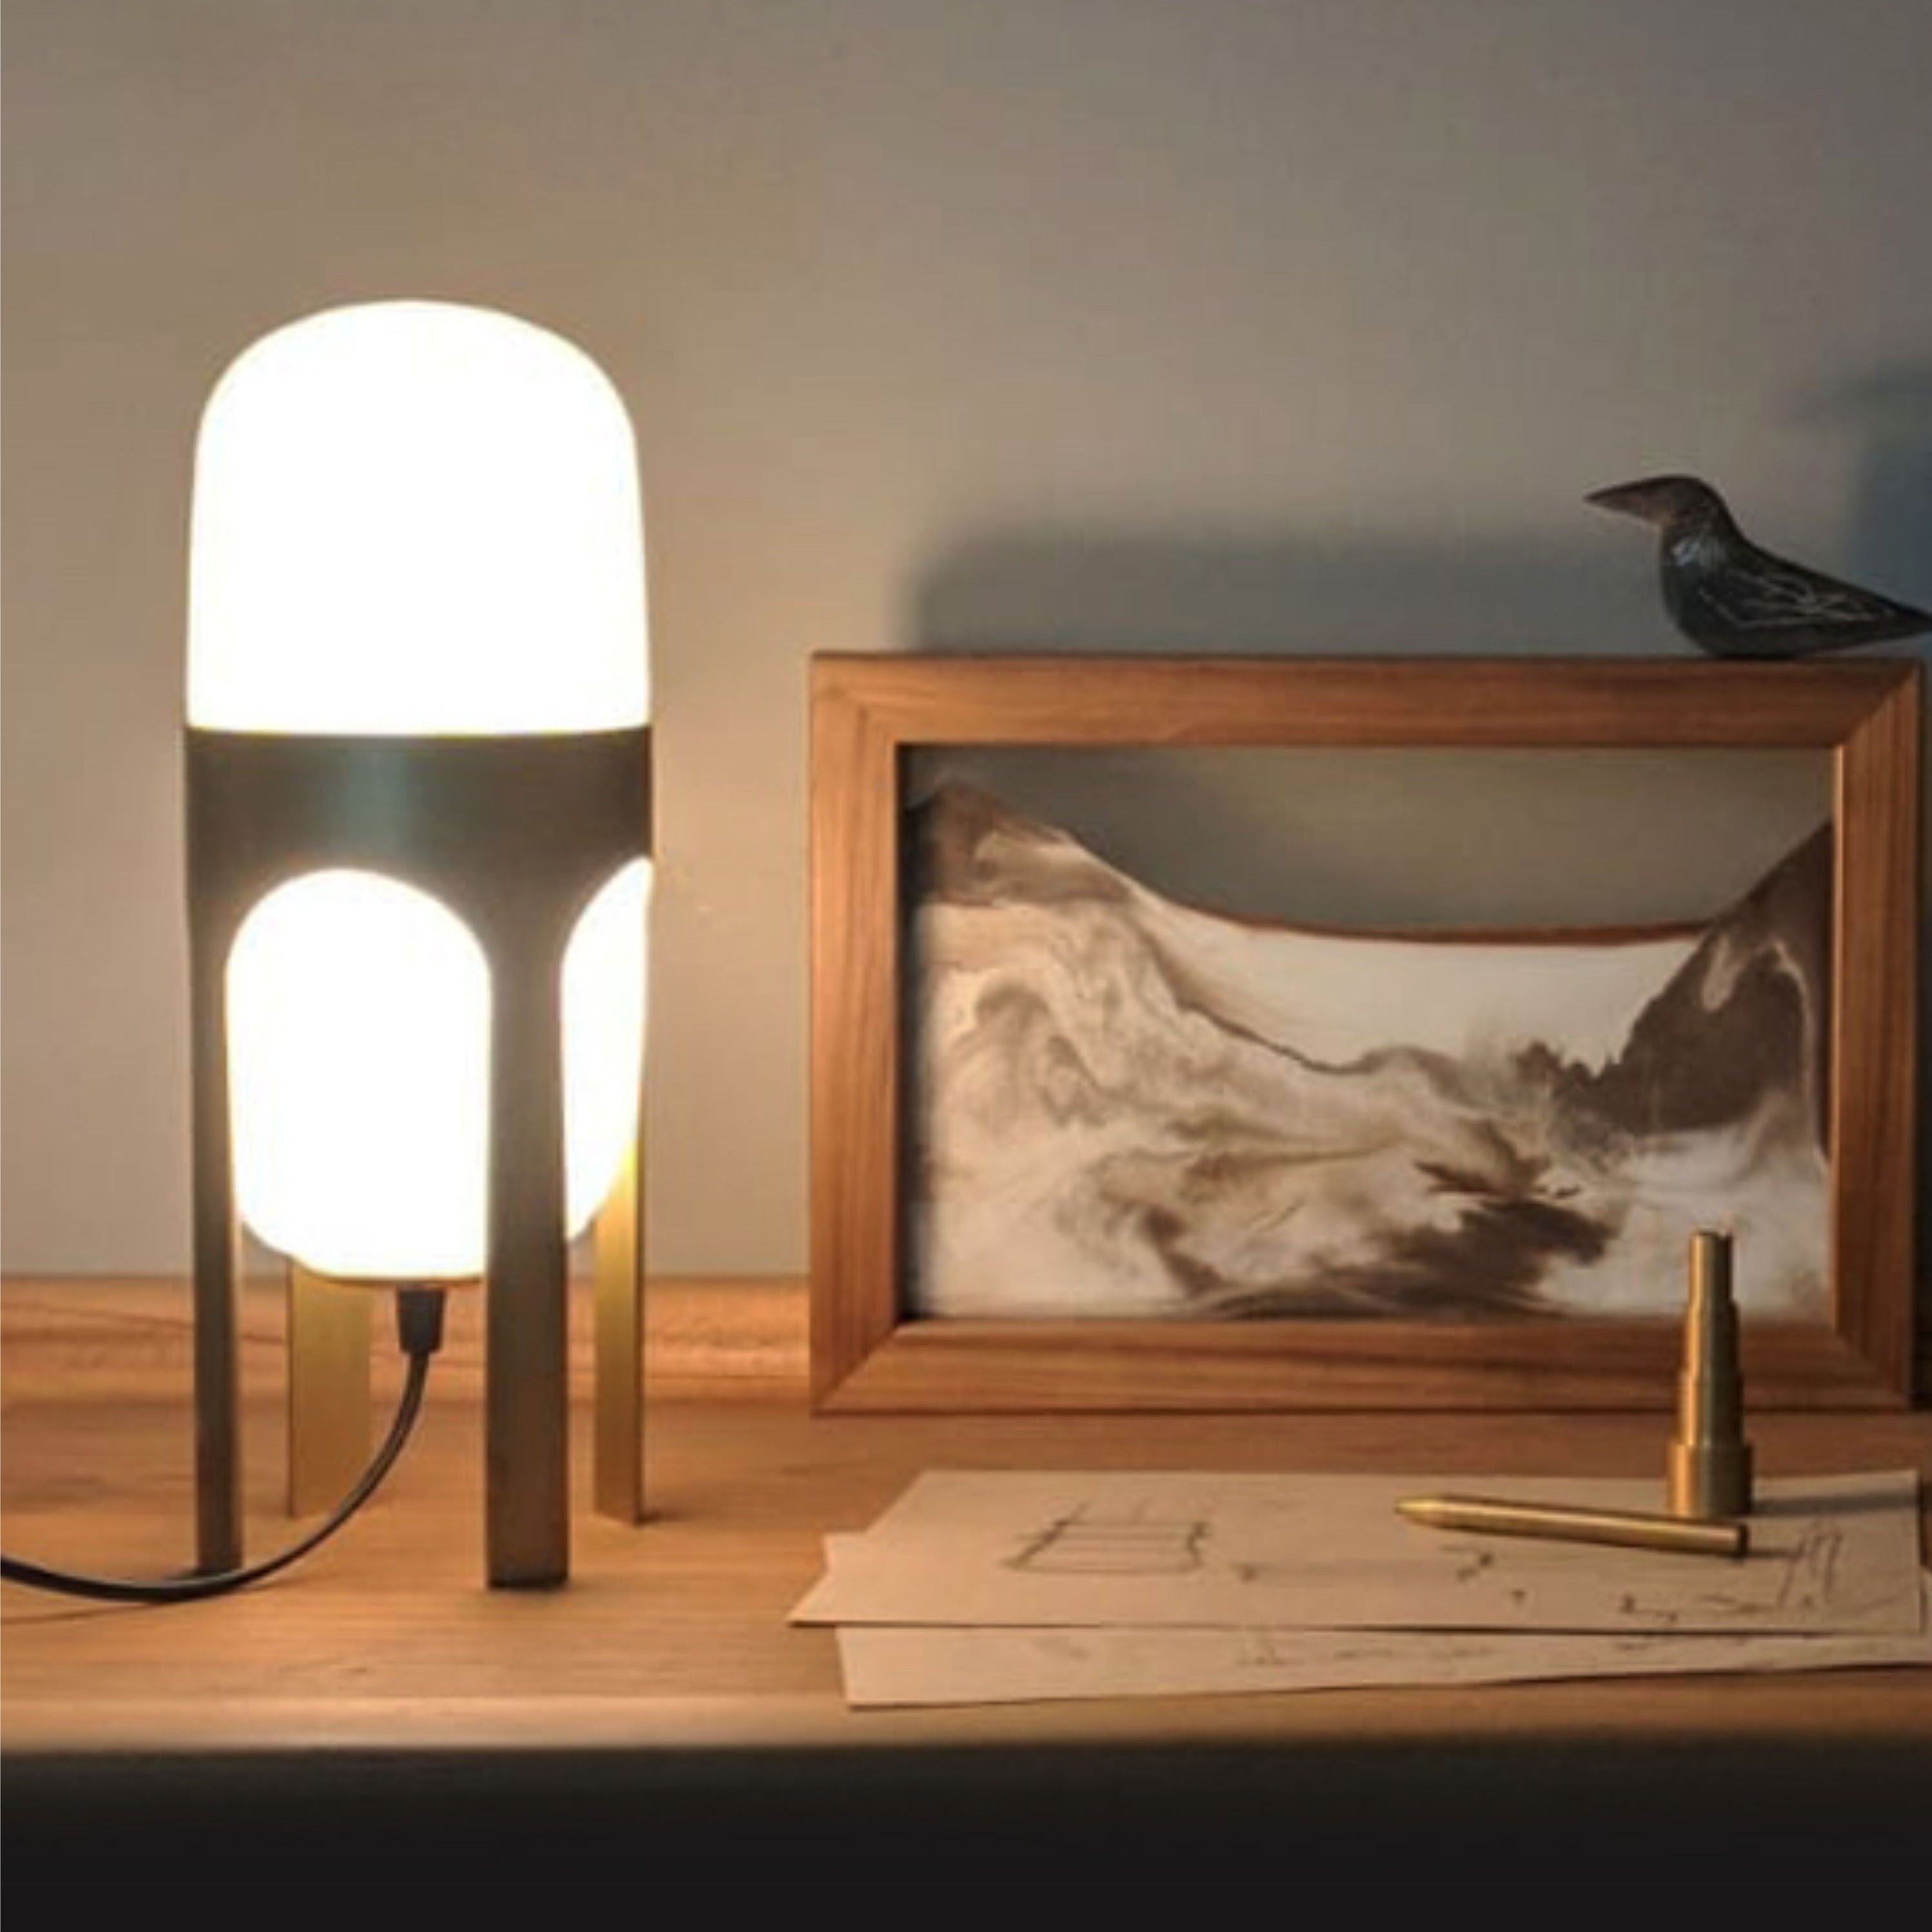 Ettore table lamp lighting aluminum opel glass handblown handcrafted, table lamp